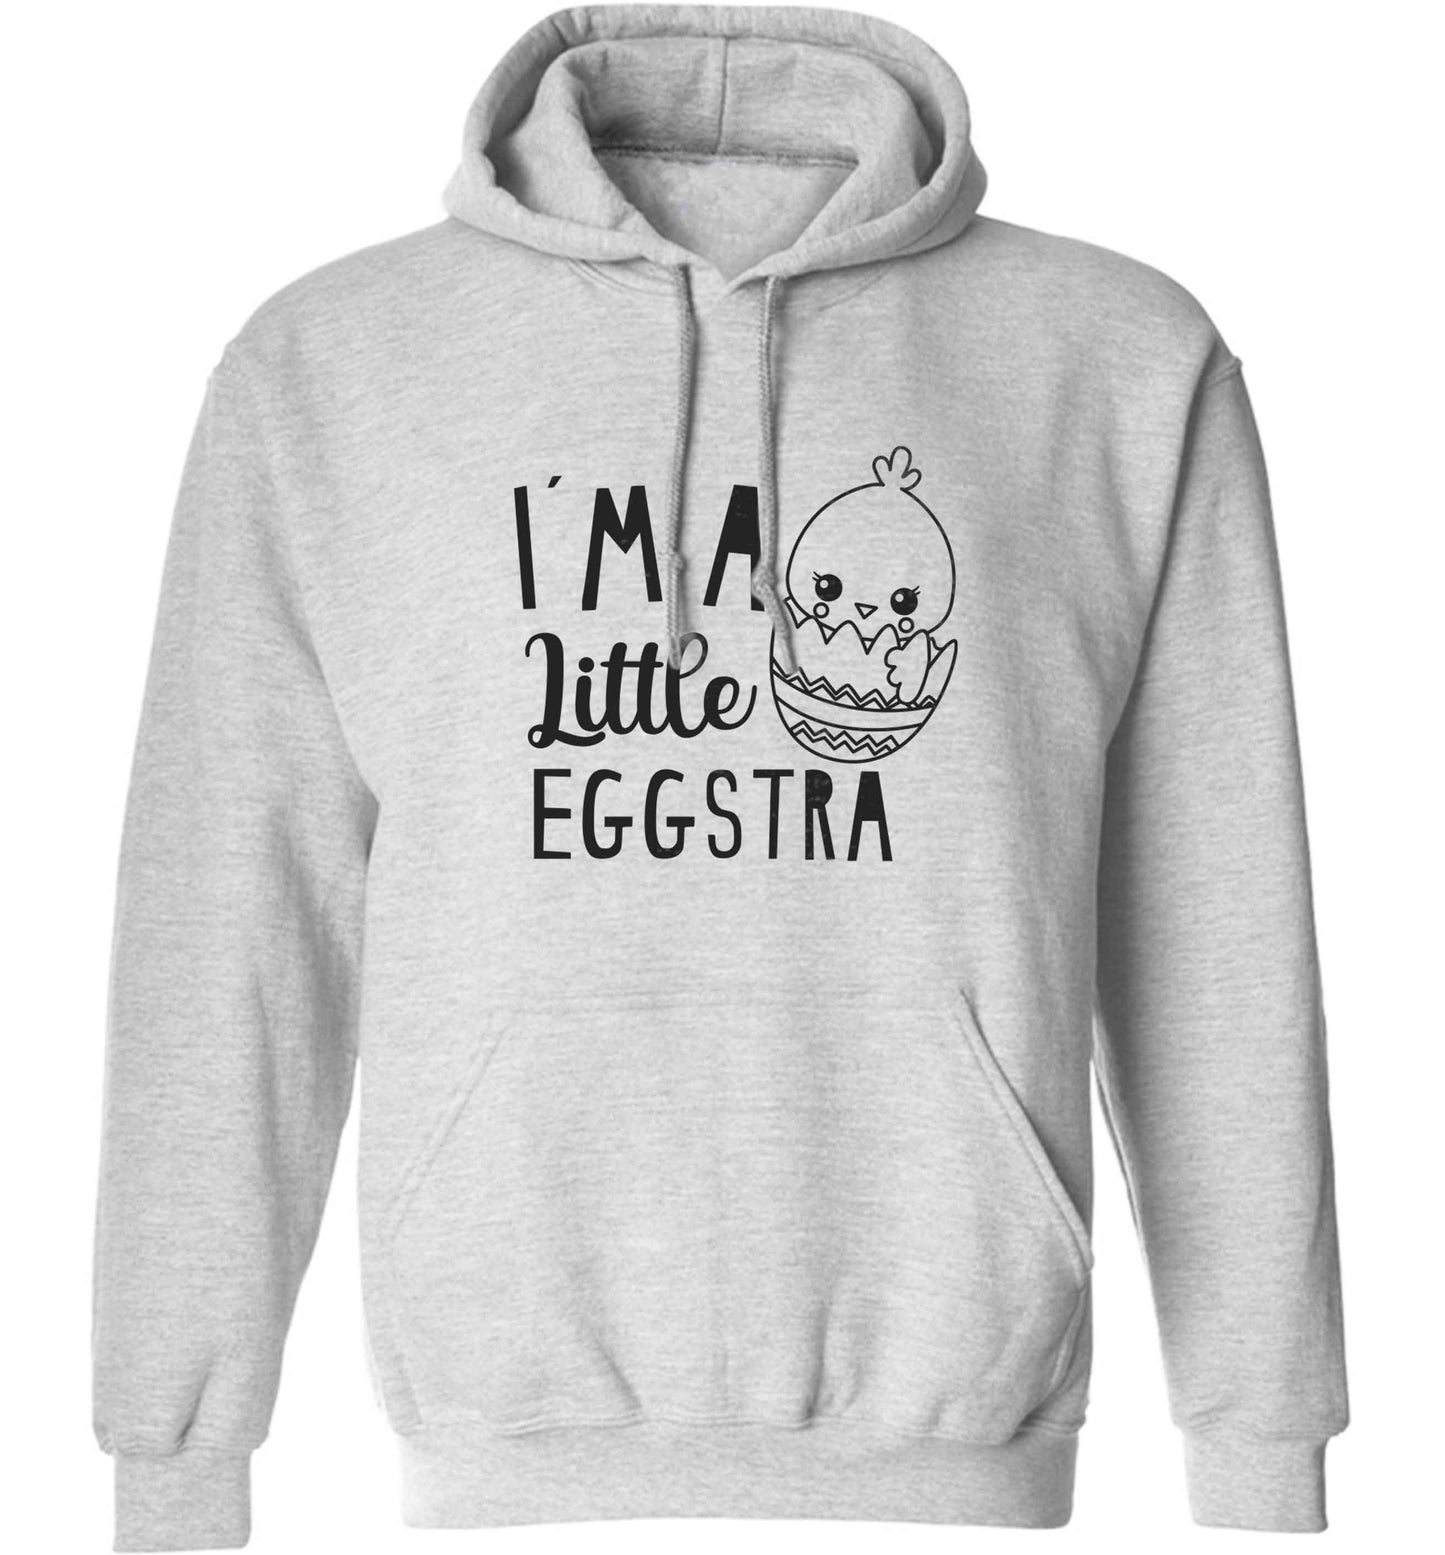 I'm a little eggstra adults unisex grey hoodie 2XL